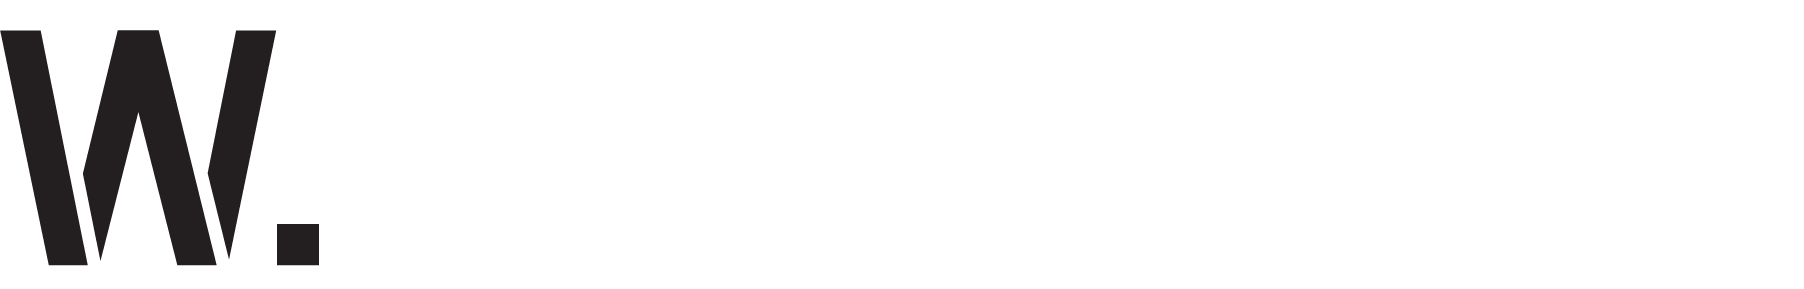 polymylos logo